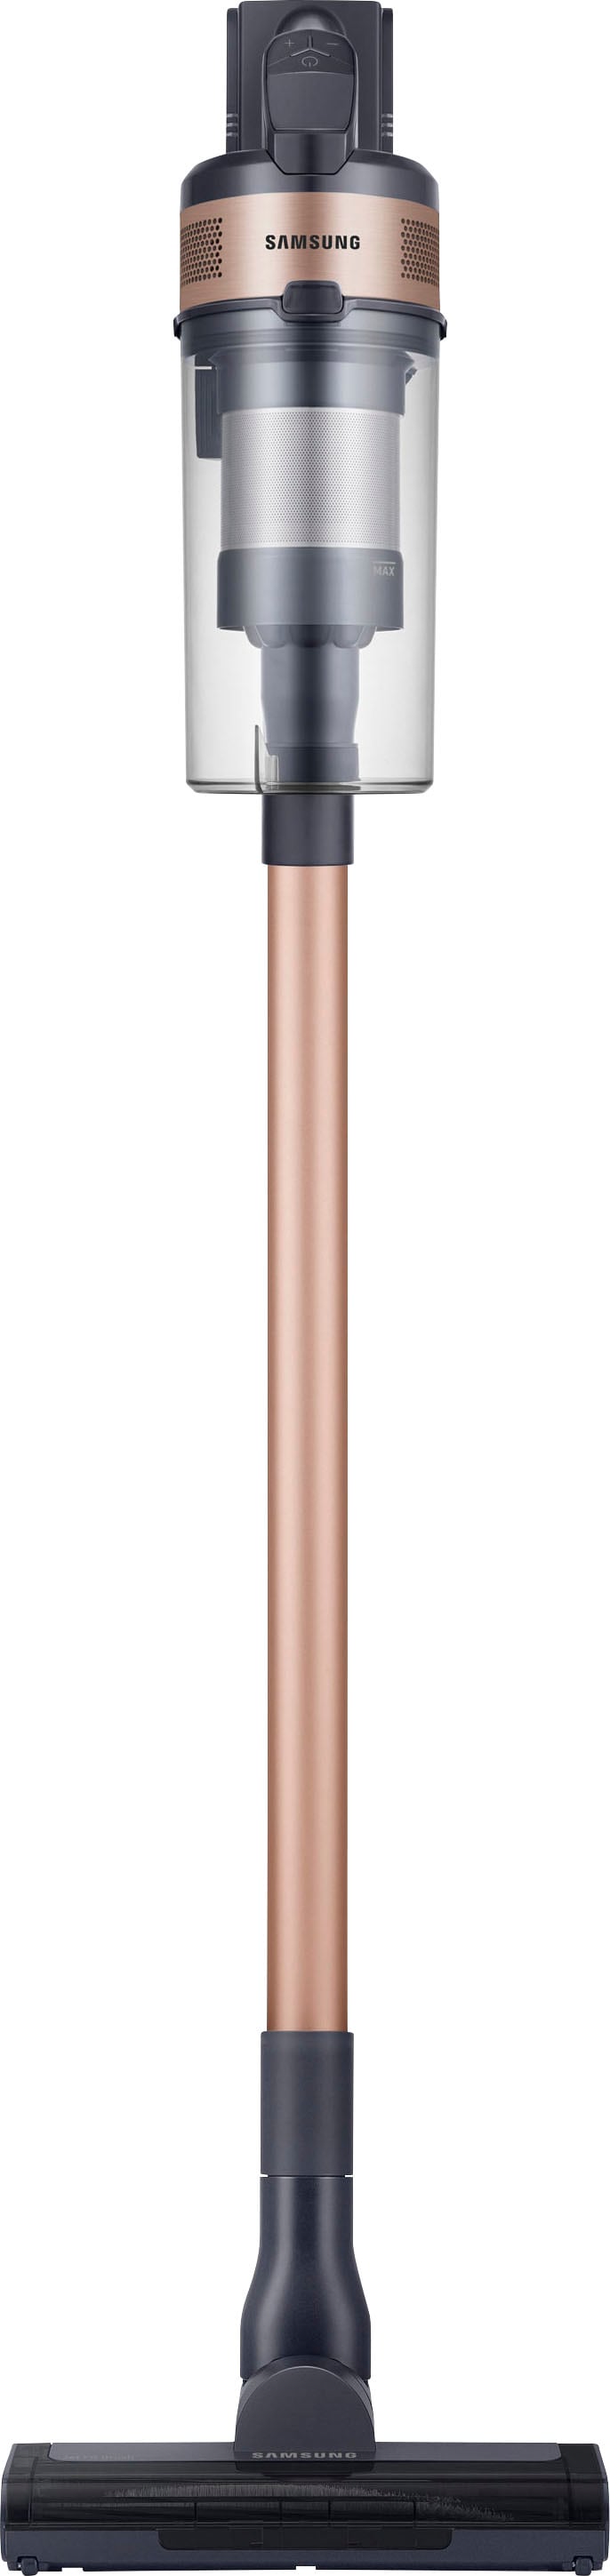 Samsung - Jet™ 60 Pet Cordless Stick Vacuum - Rose Gold_0